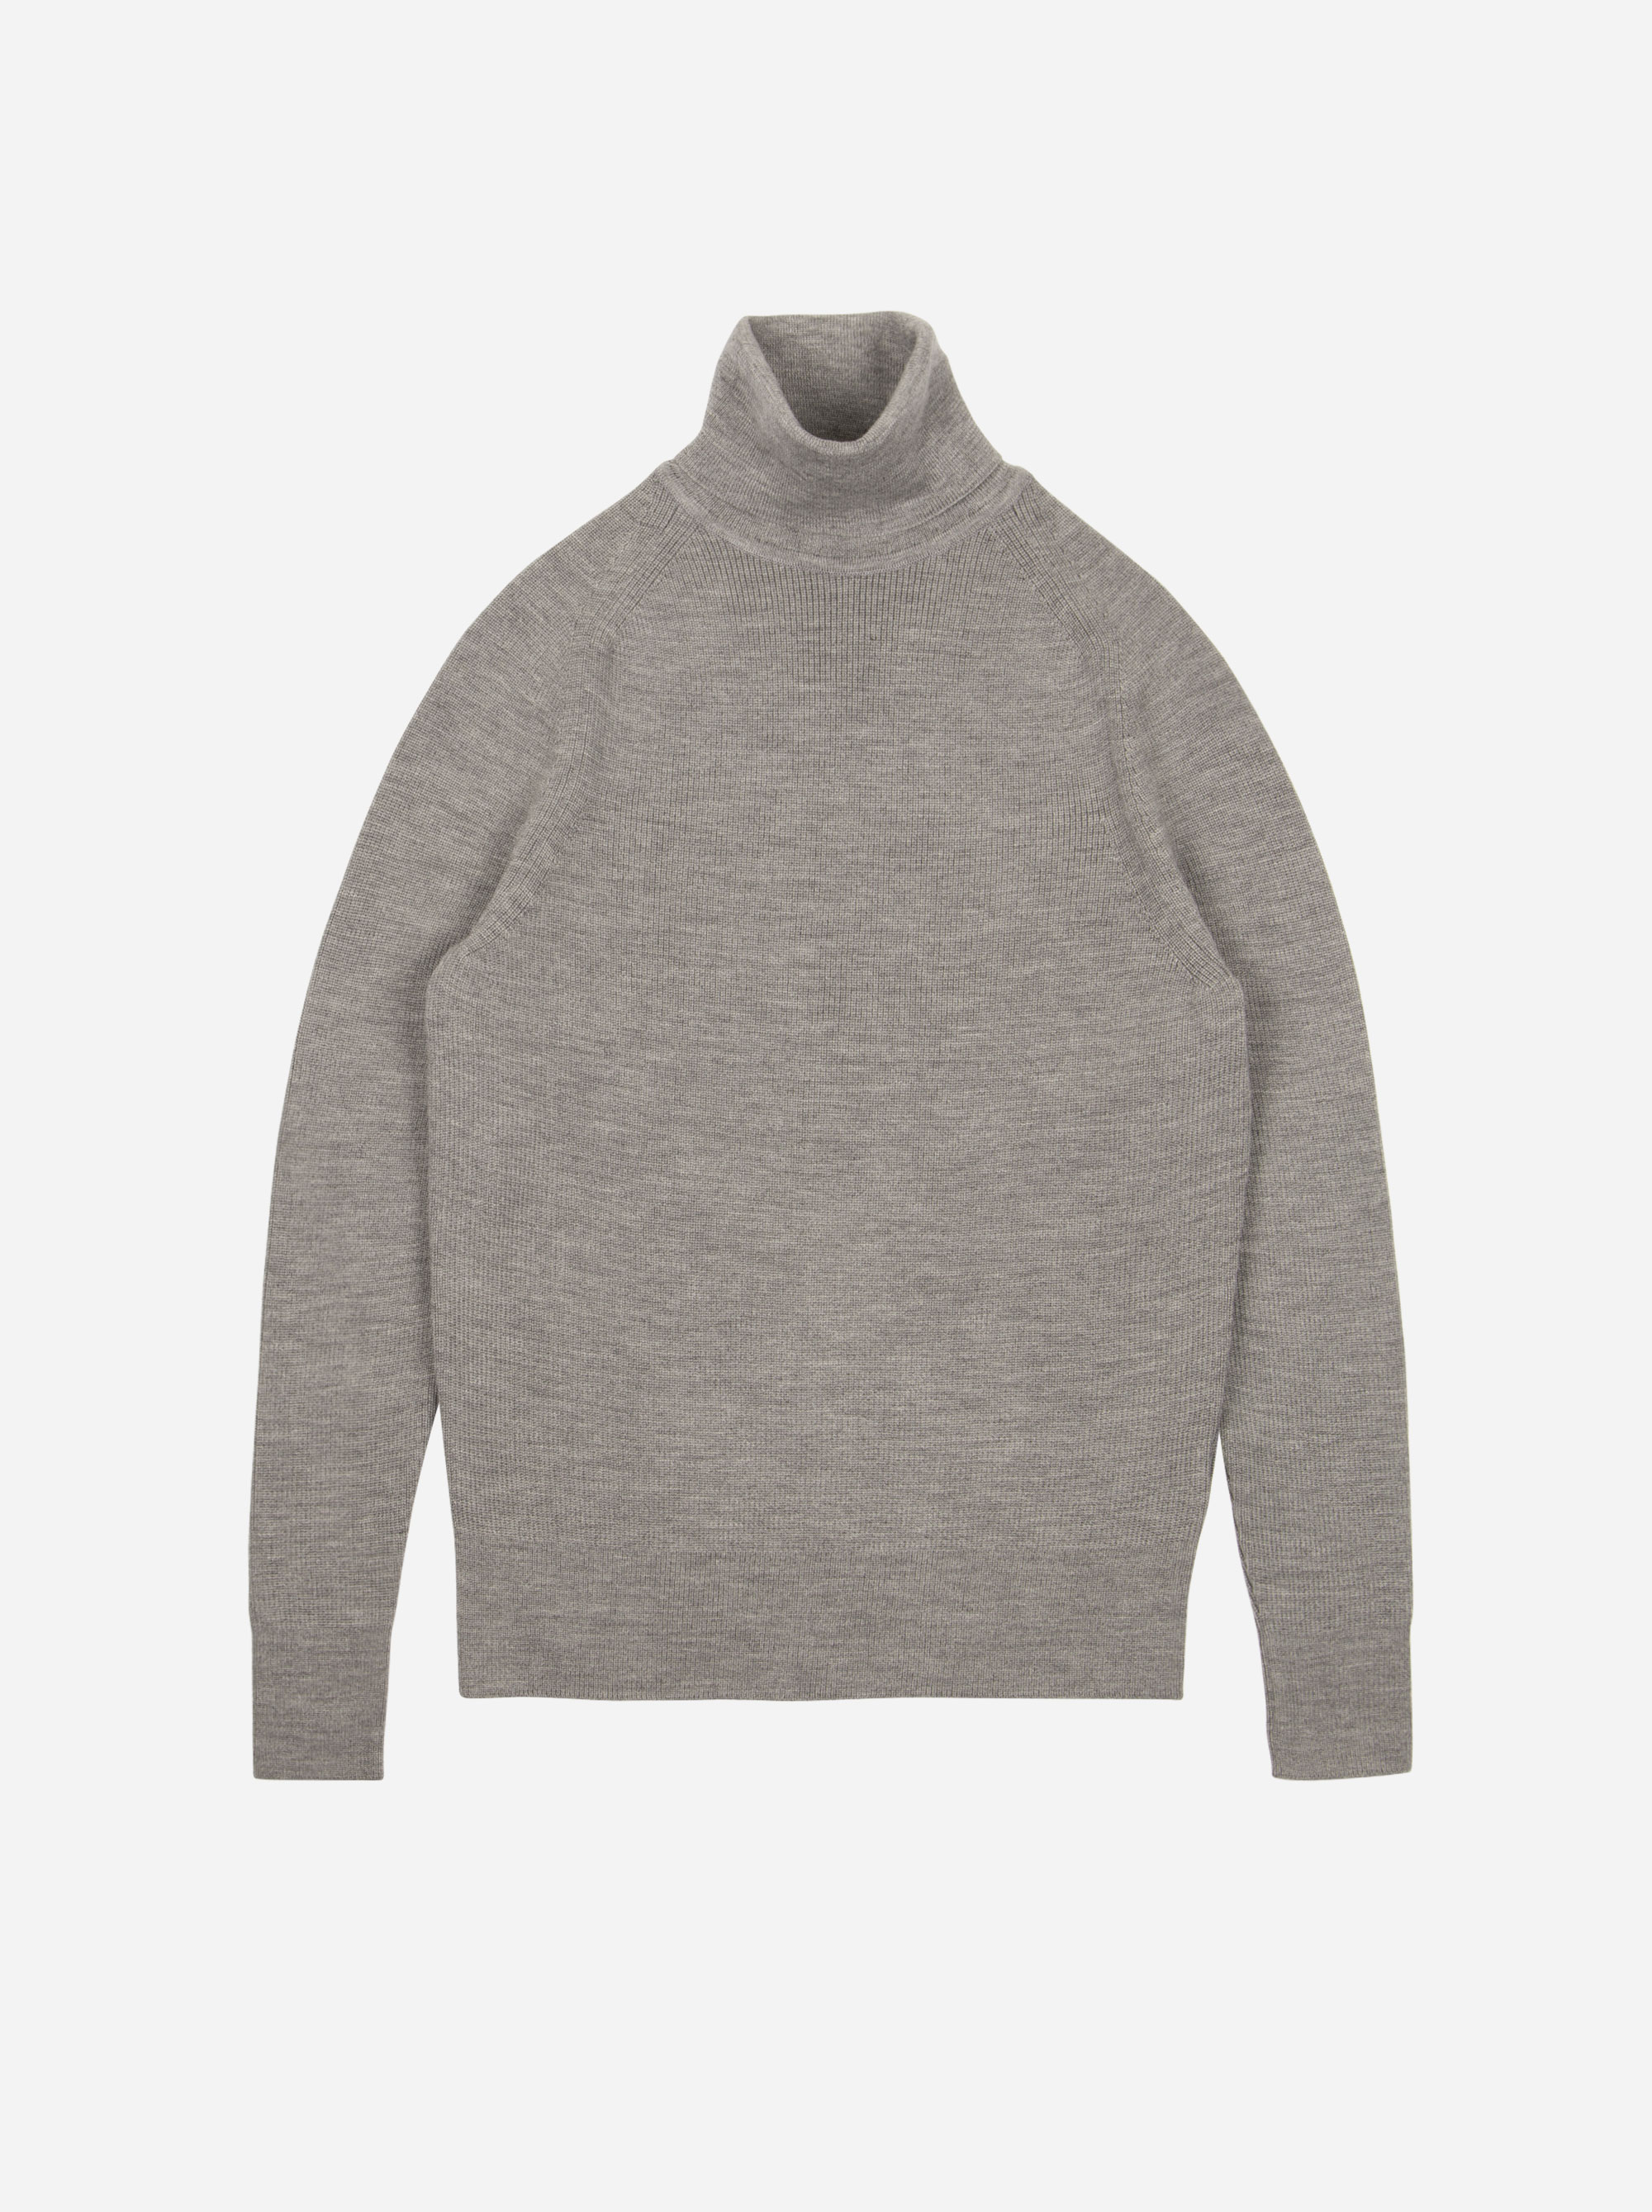 Teym - Turtleneck - The Merino Sweater - Men - Grey - 6